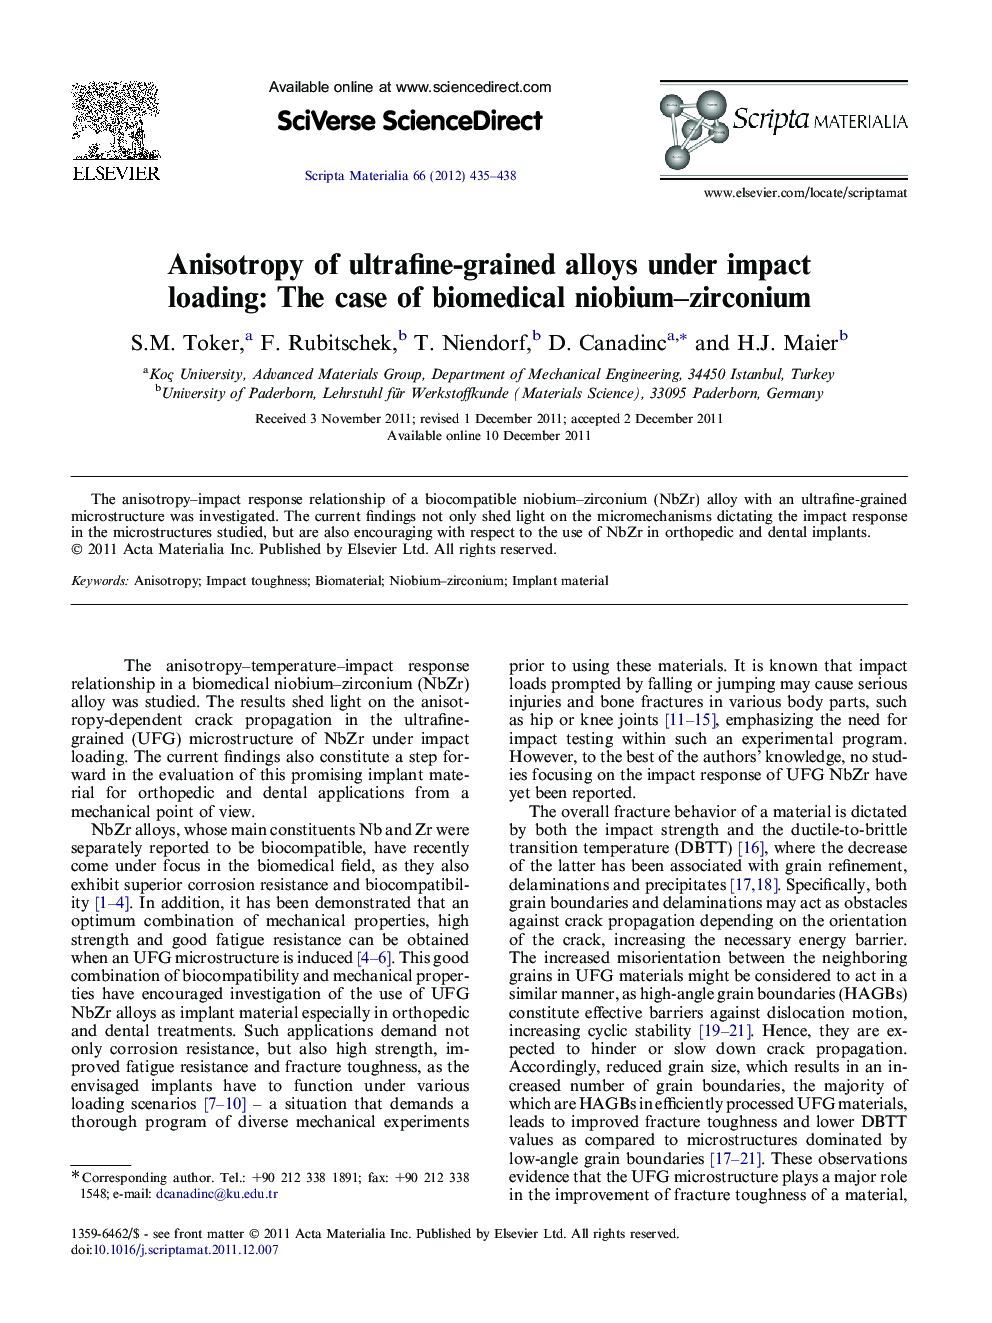 Anisotropy of ultrafine-grained alloys under impact loading: The case of biomedical niobium-zirconium